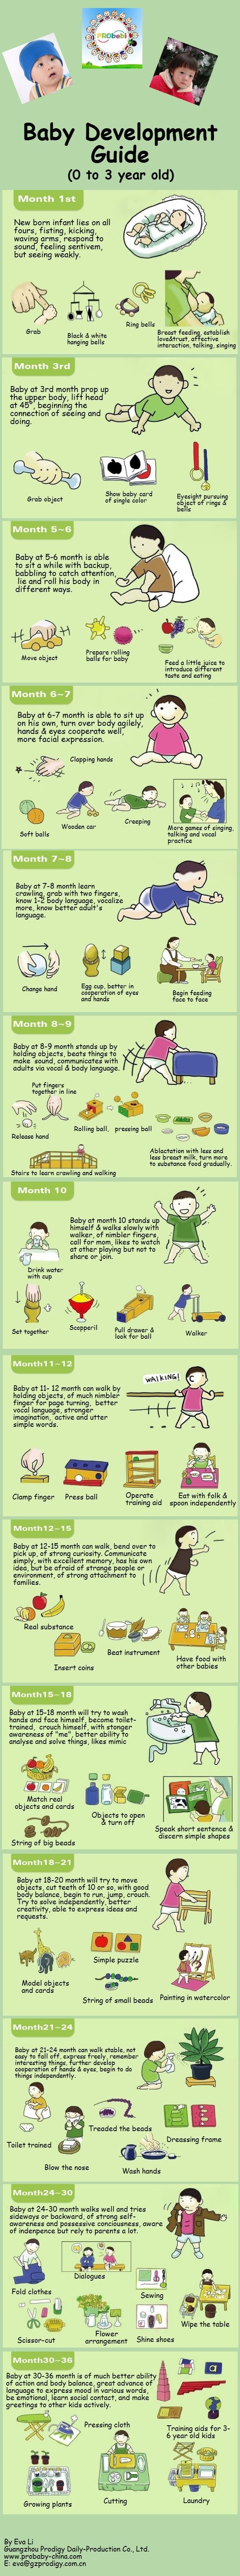 Baby Development Guide | @Piktochart #Infographic Editor